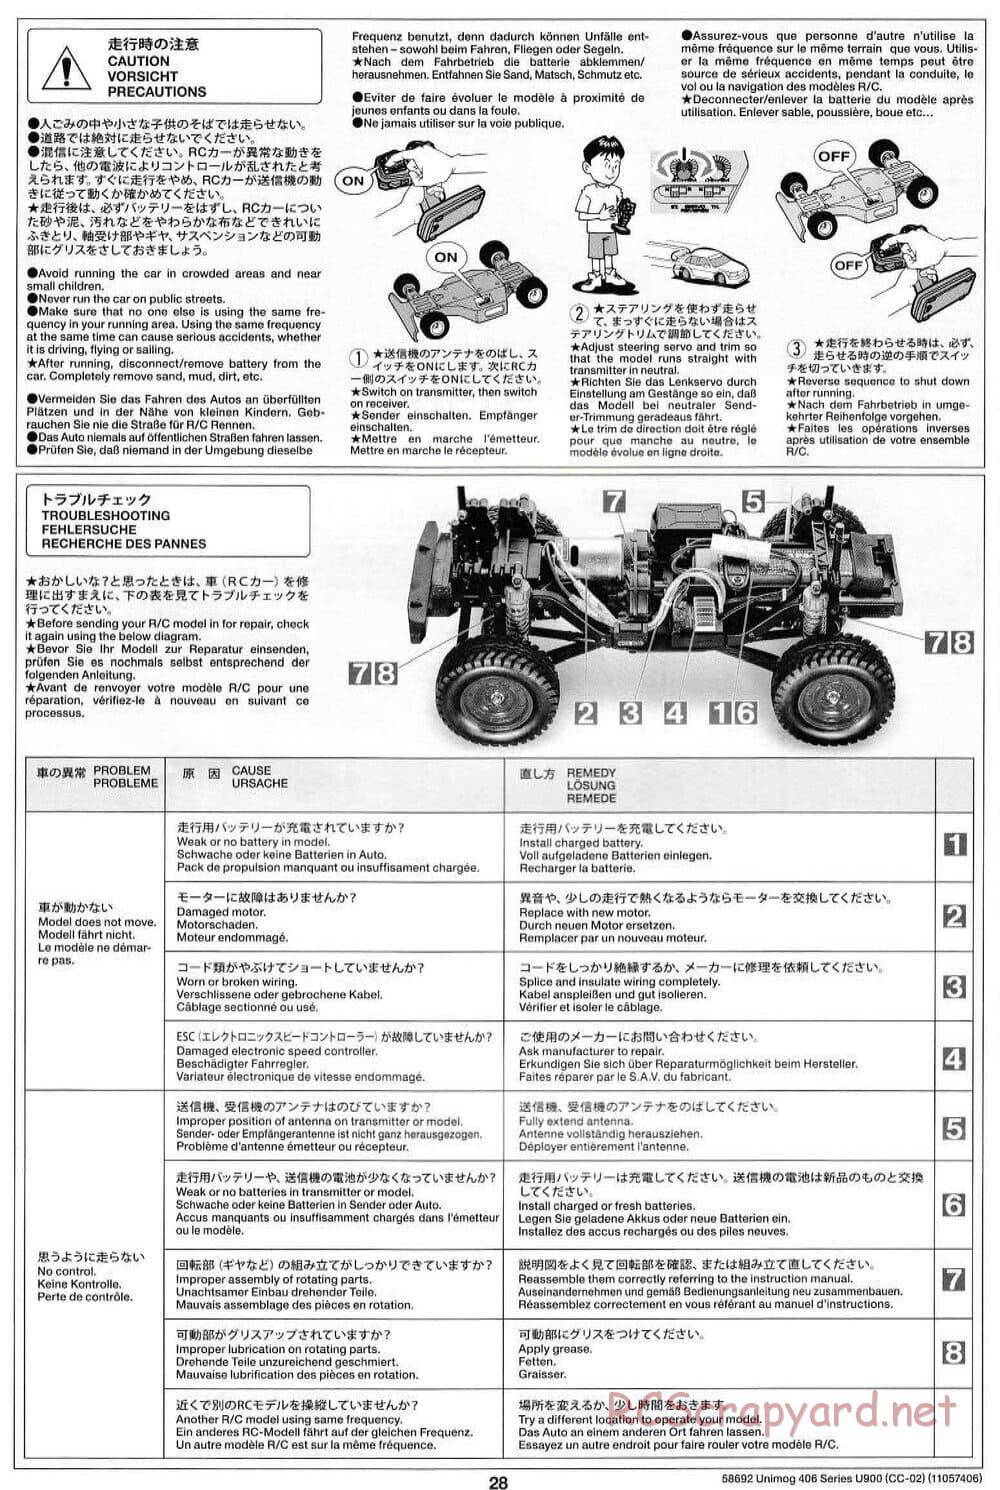 Tamiya - Mercedes-Benz Unimog 406 Series U900 - CC-02 Chassis - Manual - Page 28